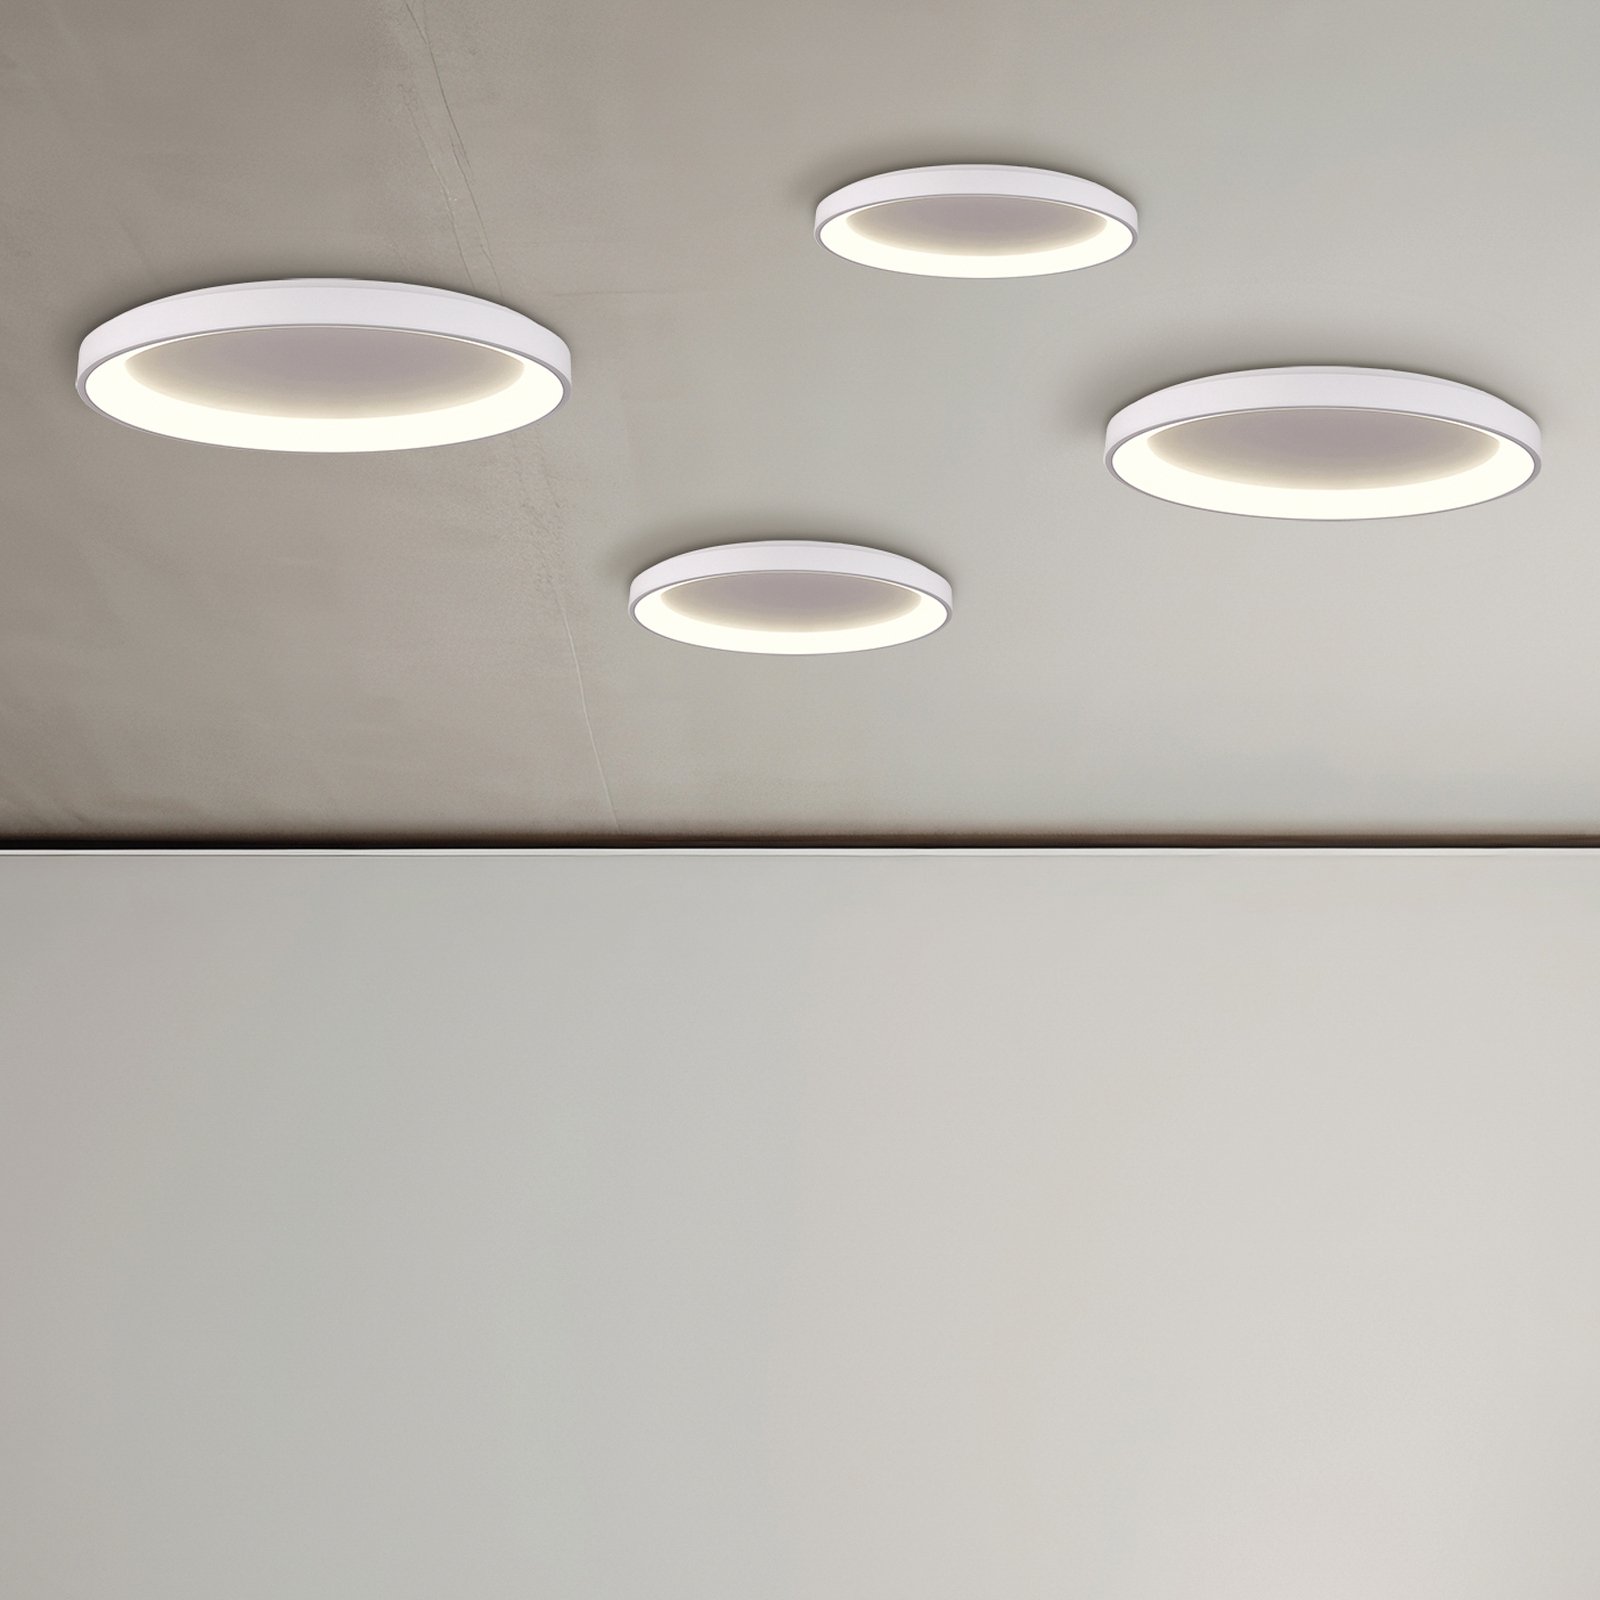 Plafonnier LED Grace, blanc, Ø 58 cm, Casambi, 50 W